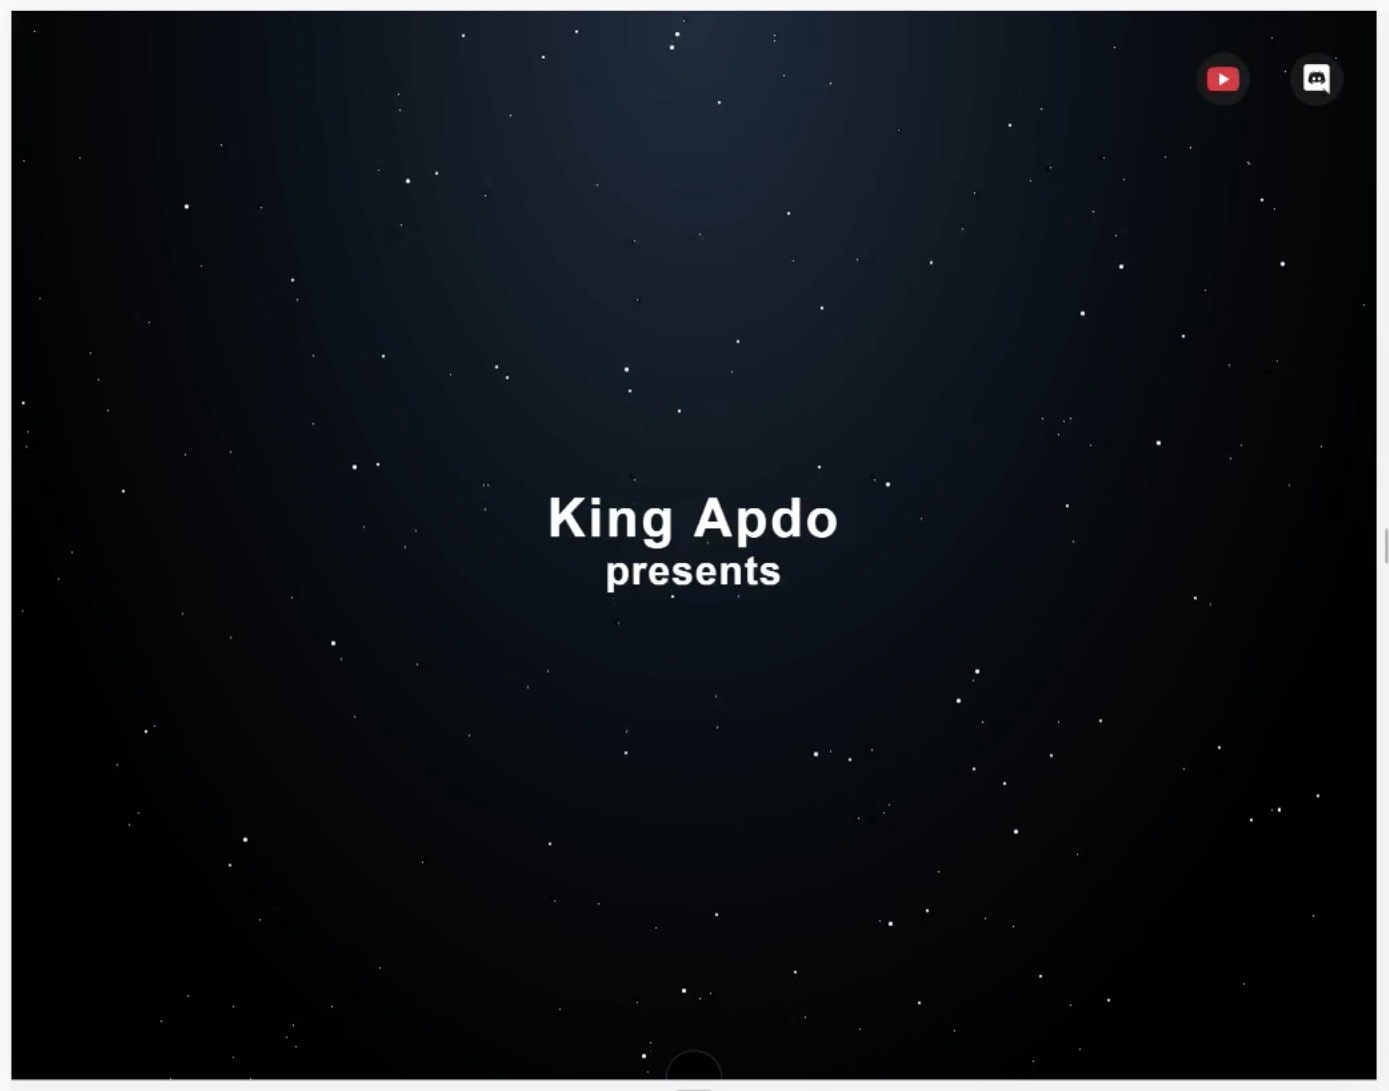 King Apdo website